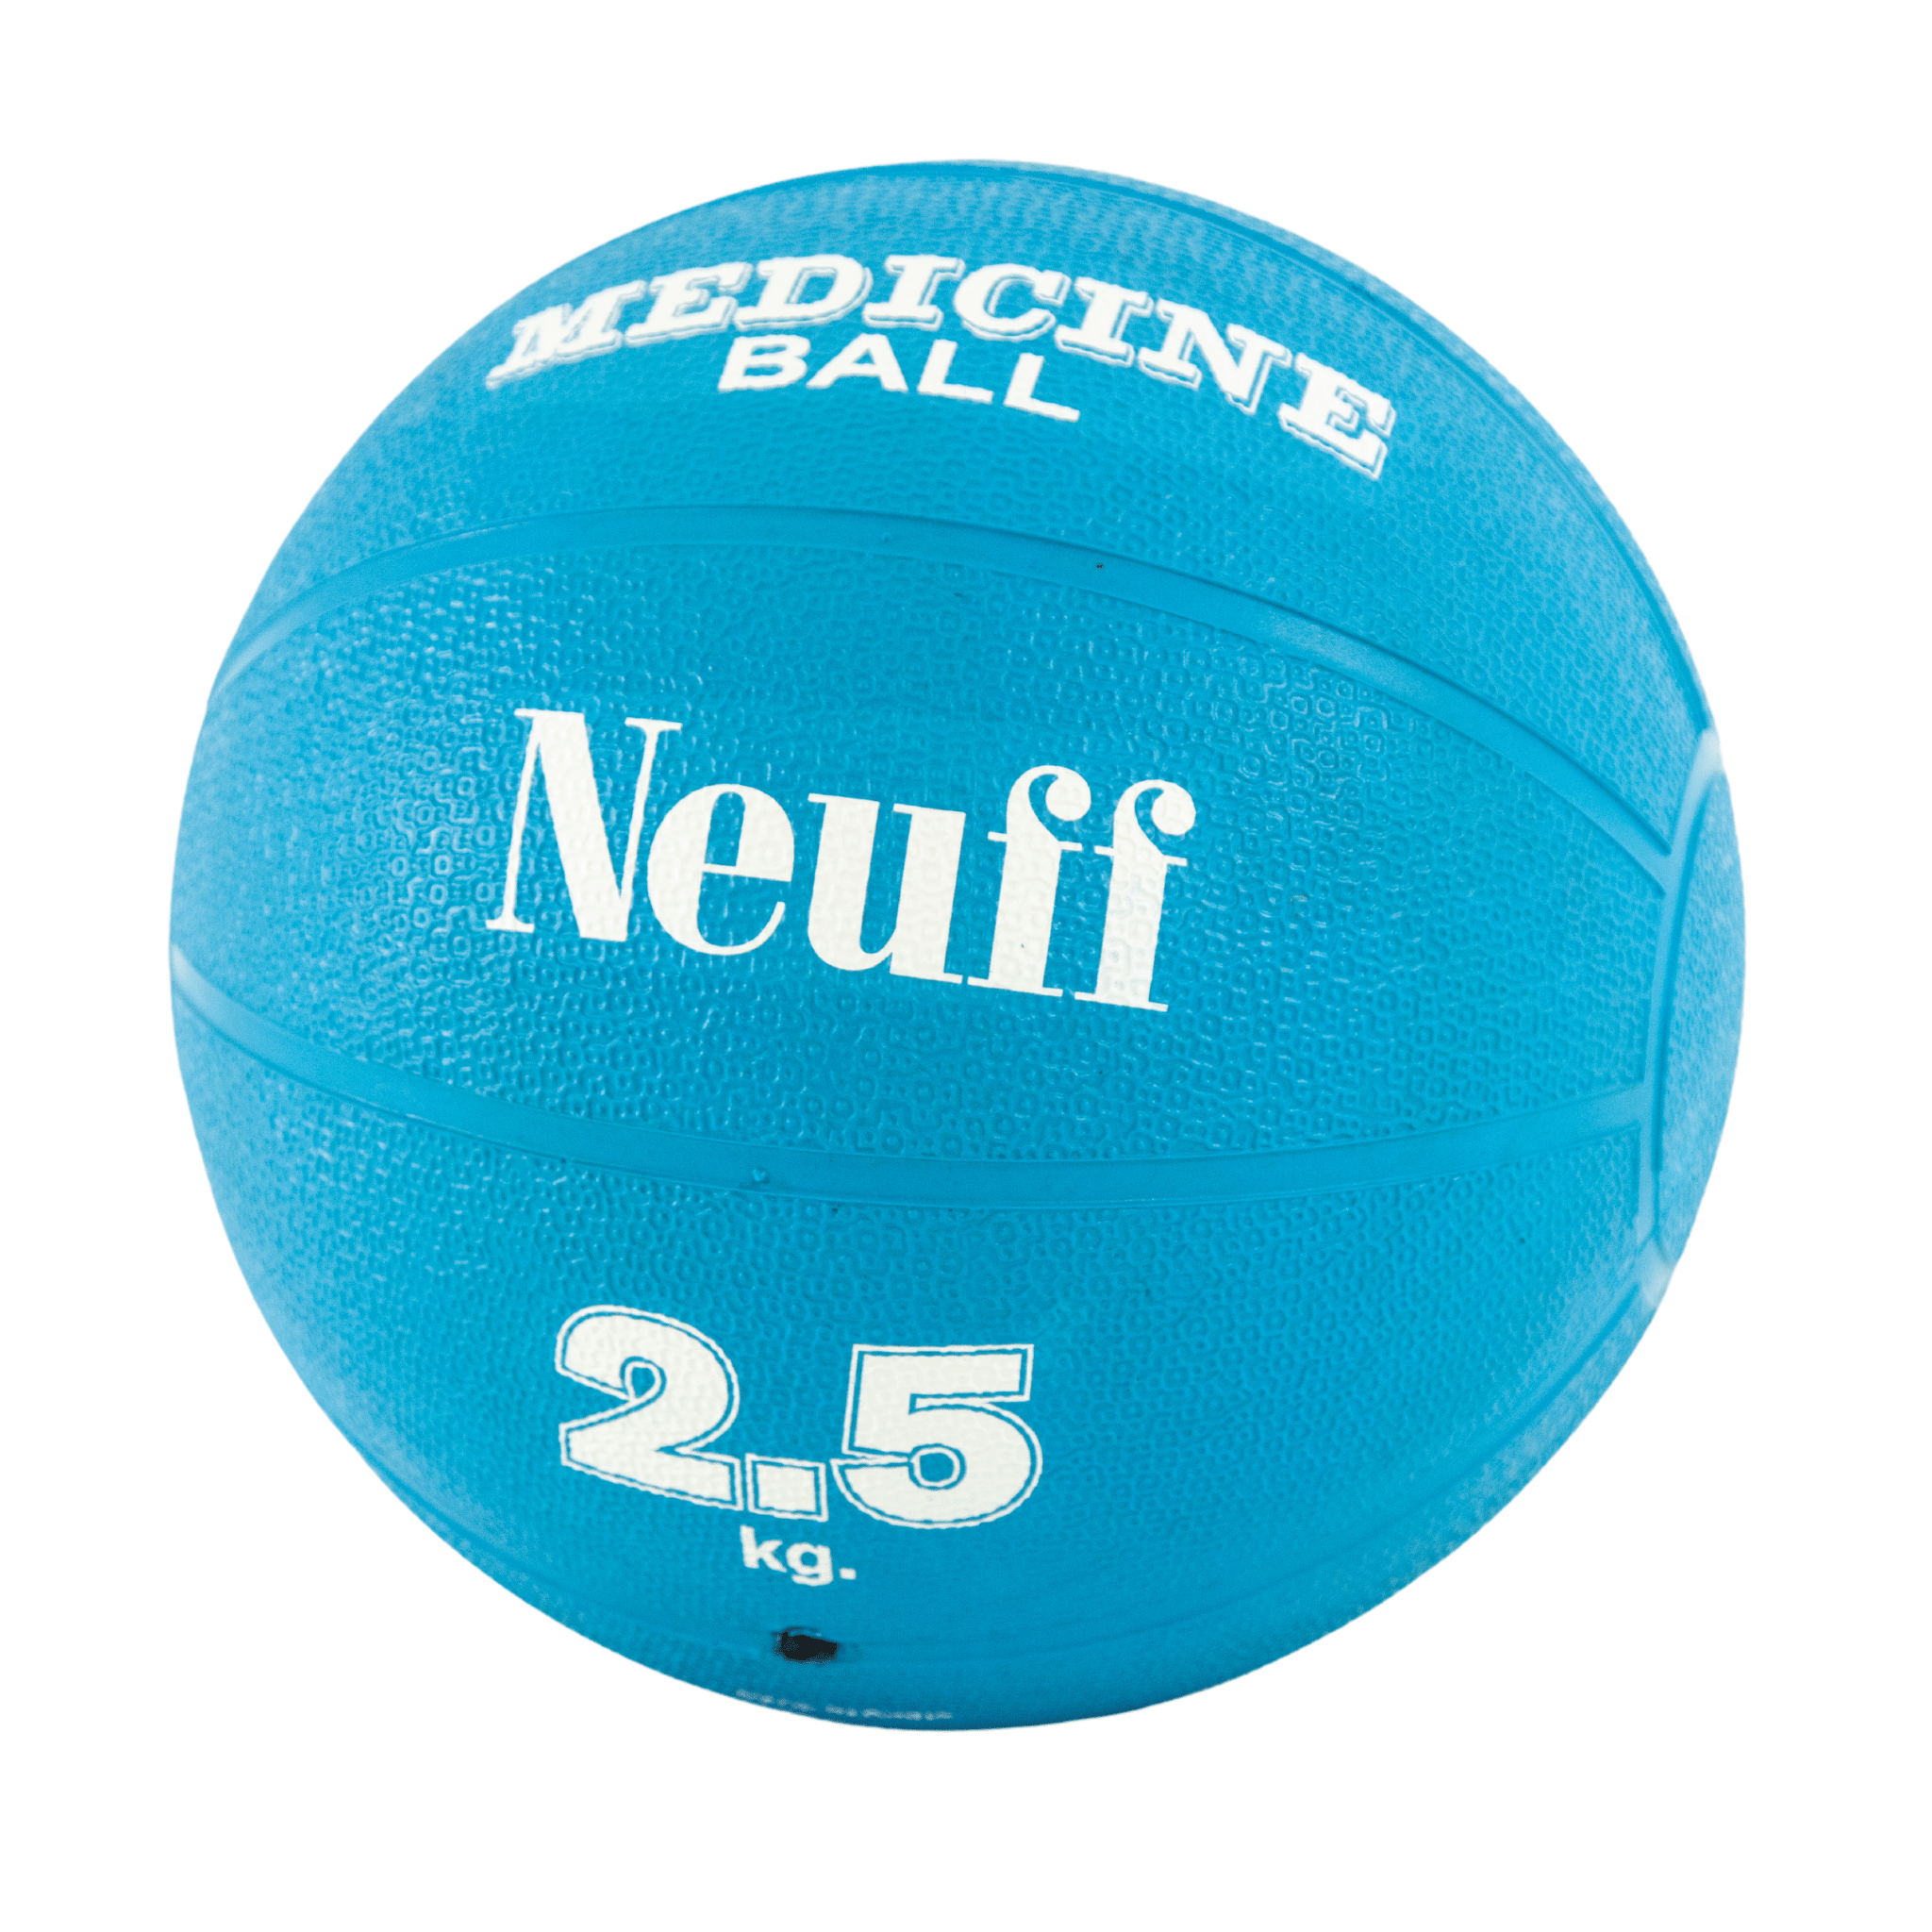 Neuff Medicine Ball | 2.5 kg | Blue with white logo